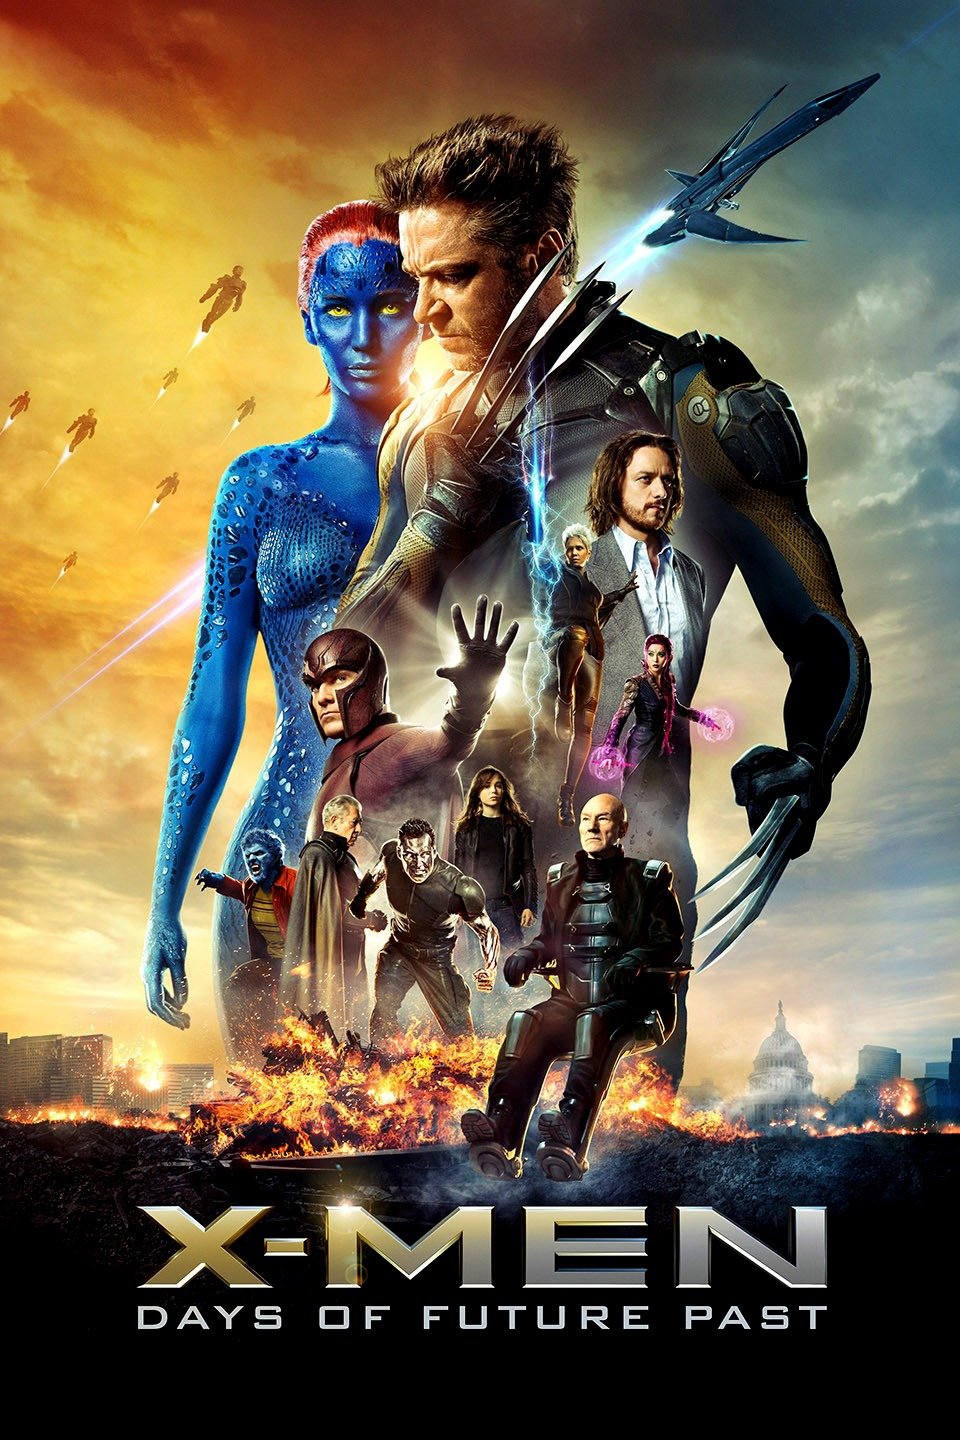 [MINI Super-HQ] X-Men: Days of Future Past (2014) เอ็กซ์เม็น สงครามวันพิฆาตกู้อนาคต ภาค 7 [1080P] [พากย์ไทย 5.1 + อังกฤษ DTS] [บรรยายไทย + อังกฤษ] [เสียงไทย + ซับไทย] [ONE2UP]